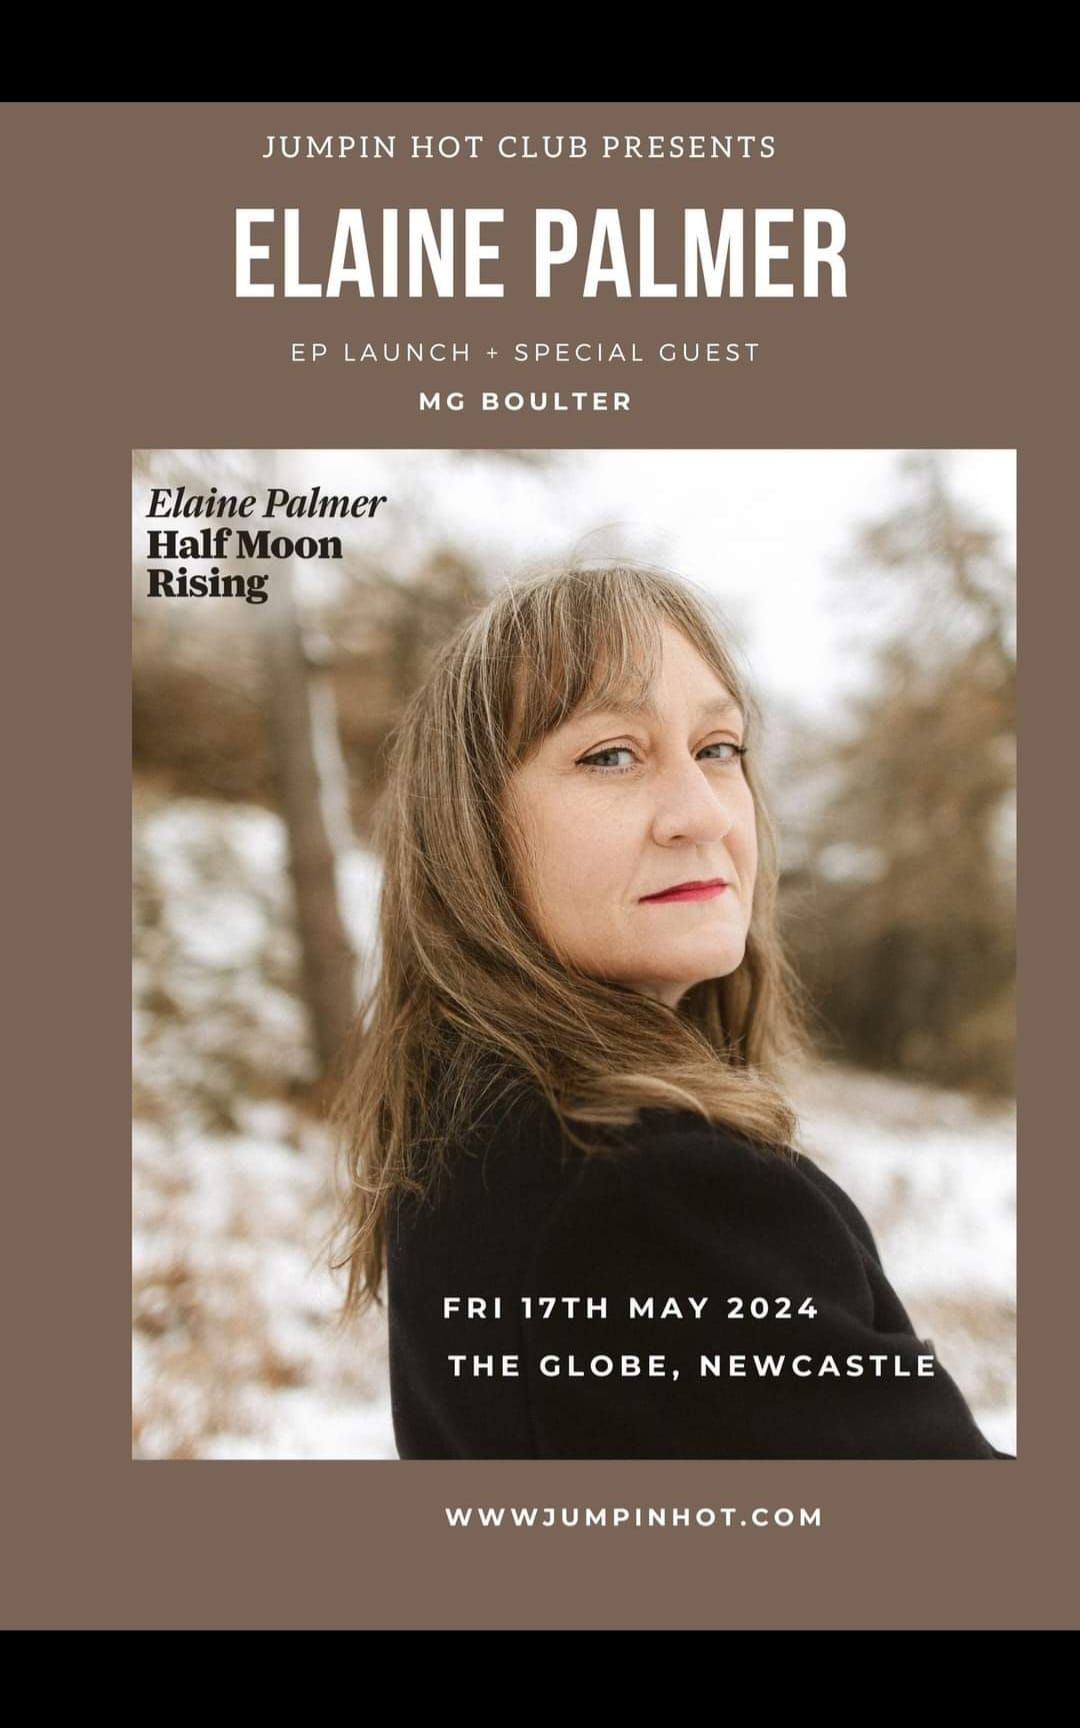 Elaine Palmer album launch (MG Boulter special guest)